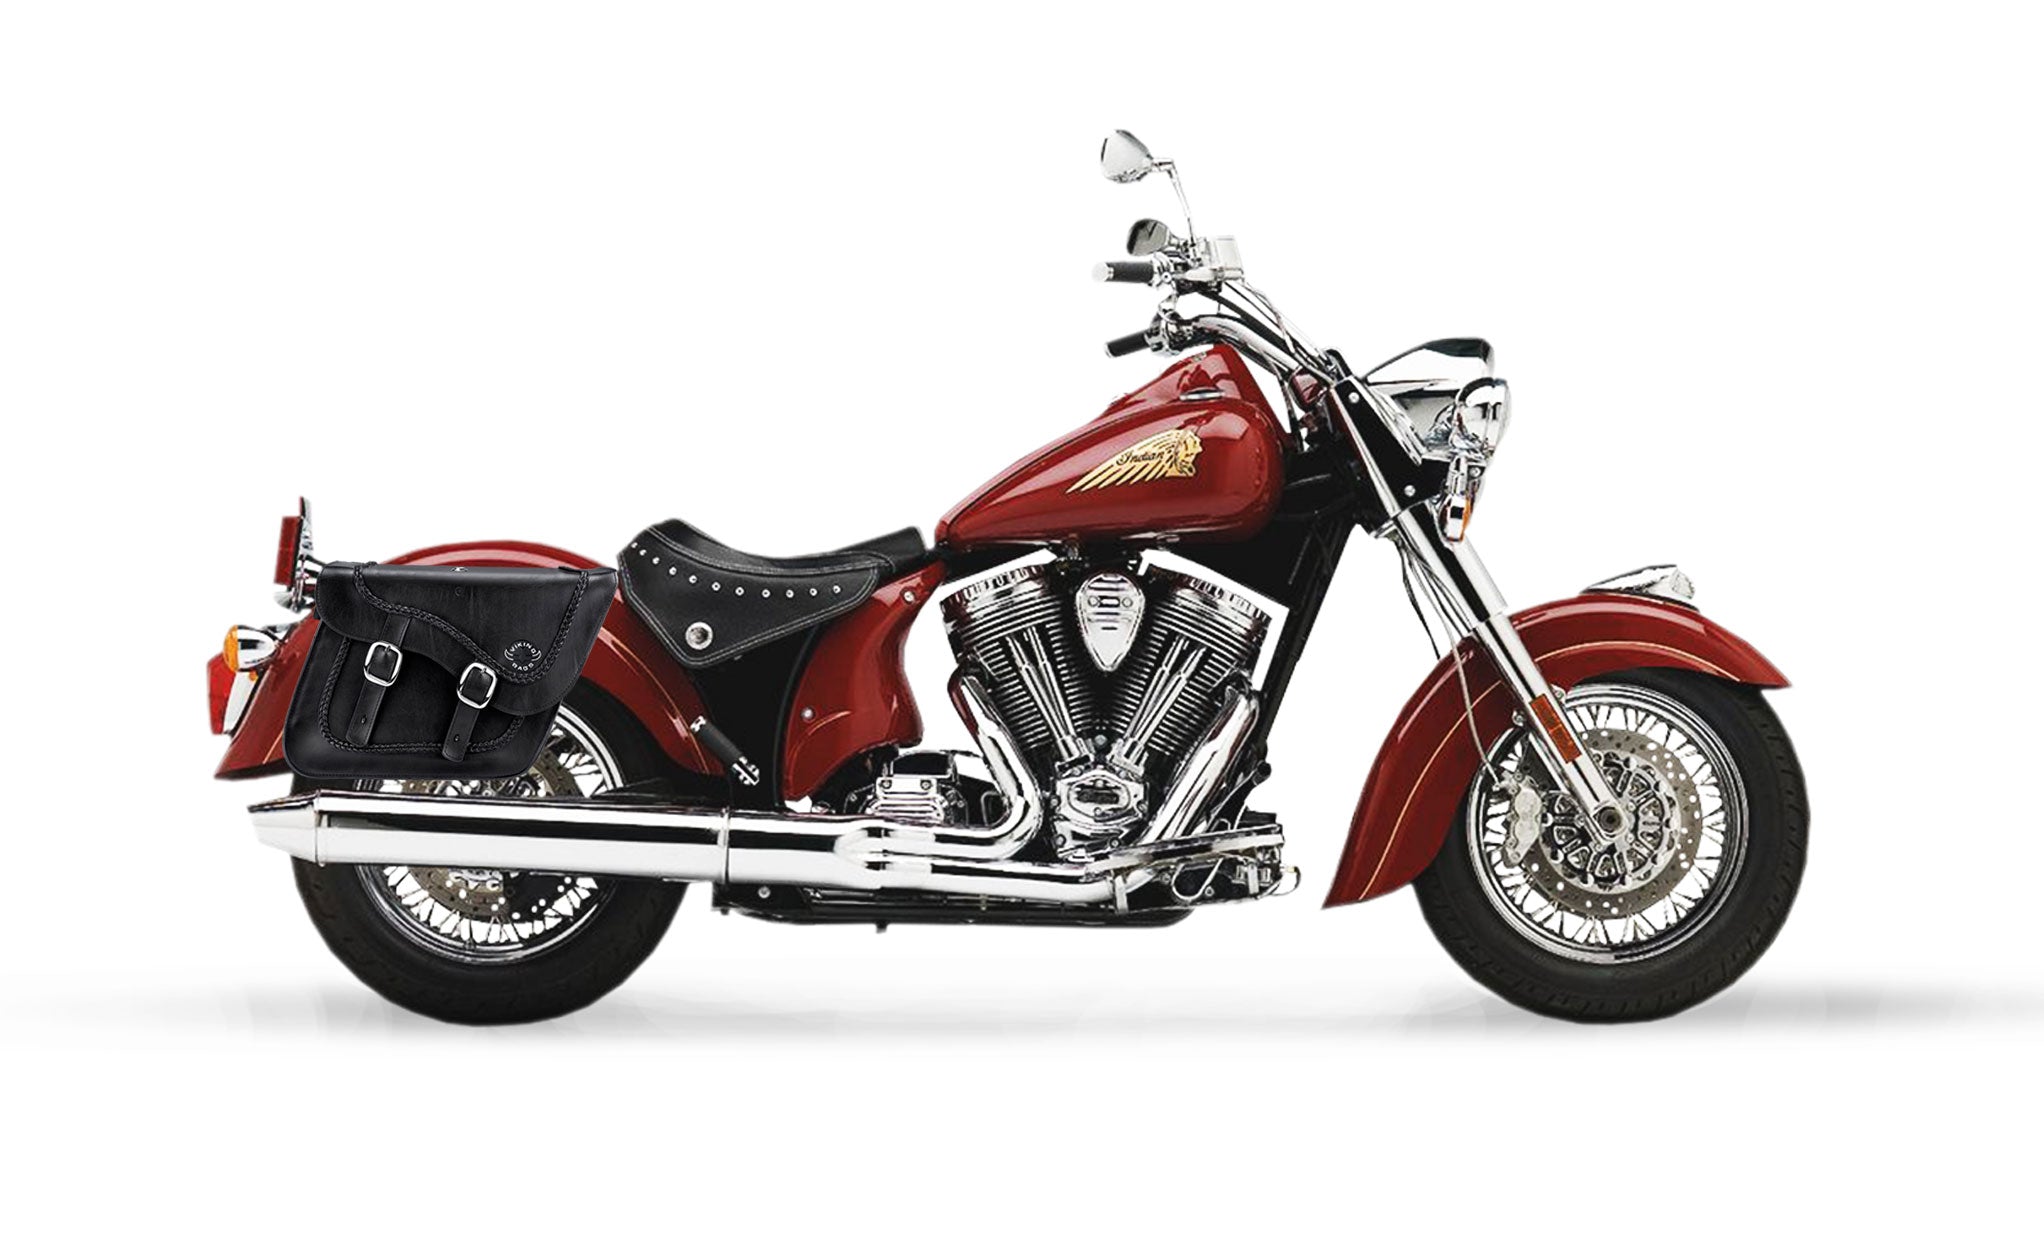 Viking Americano Indian Chief Standard Braided Large Leather Motorcycle Saddlebags on Bike Photo @expand